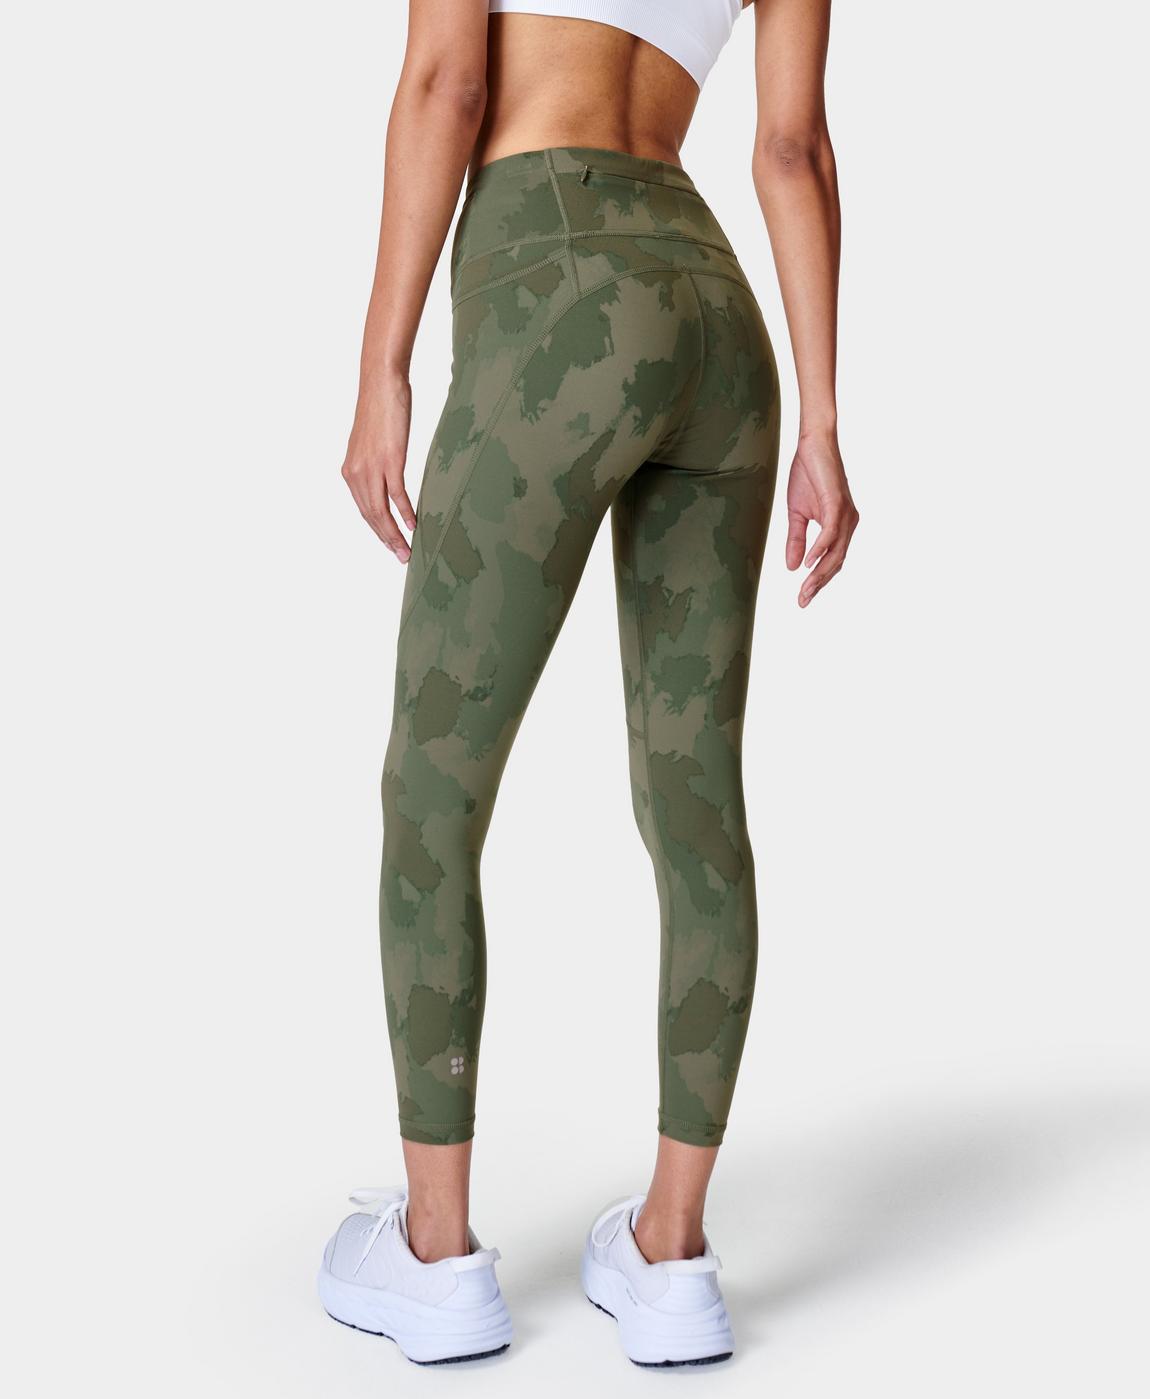 Power 7/8 Gym Leggings - Green Painted Camo Print, Women's Leggings